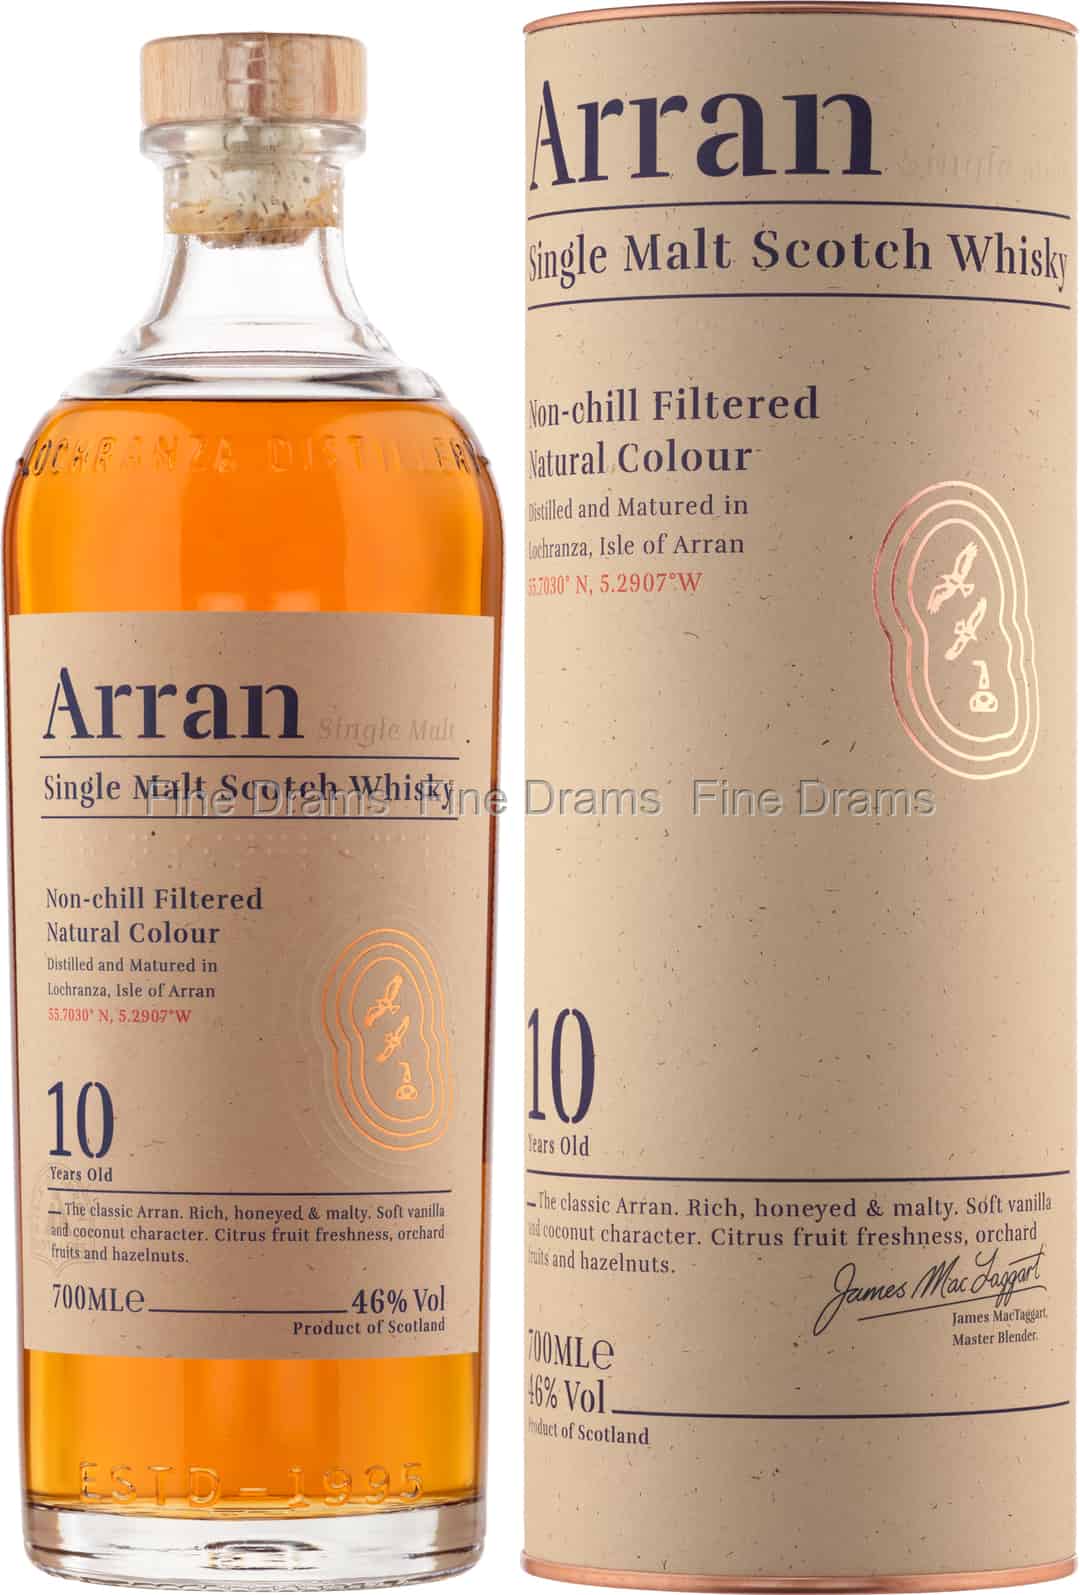 The Arran Single Malt Scotch Whisky aged 21 yrs 750ml